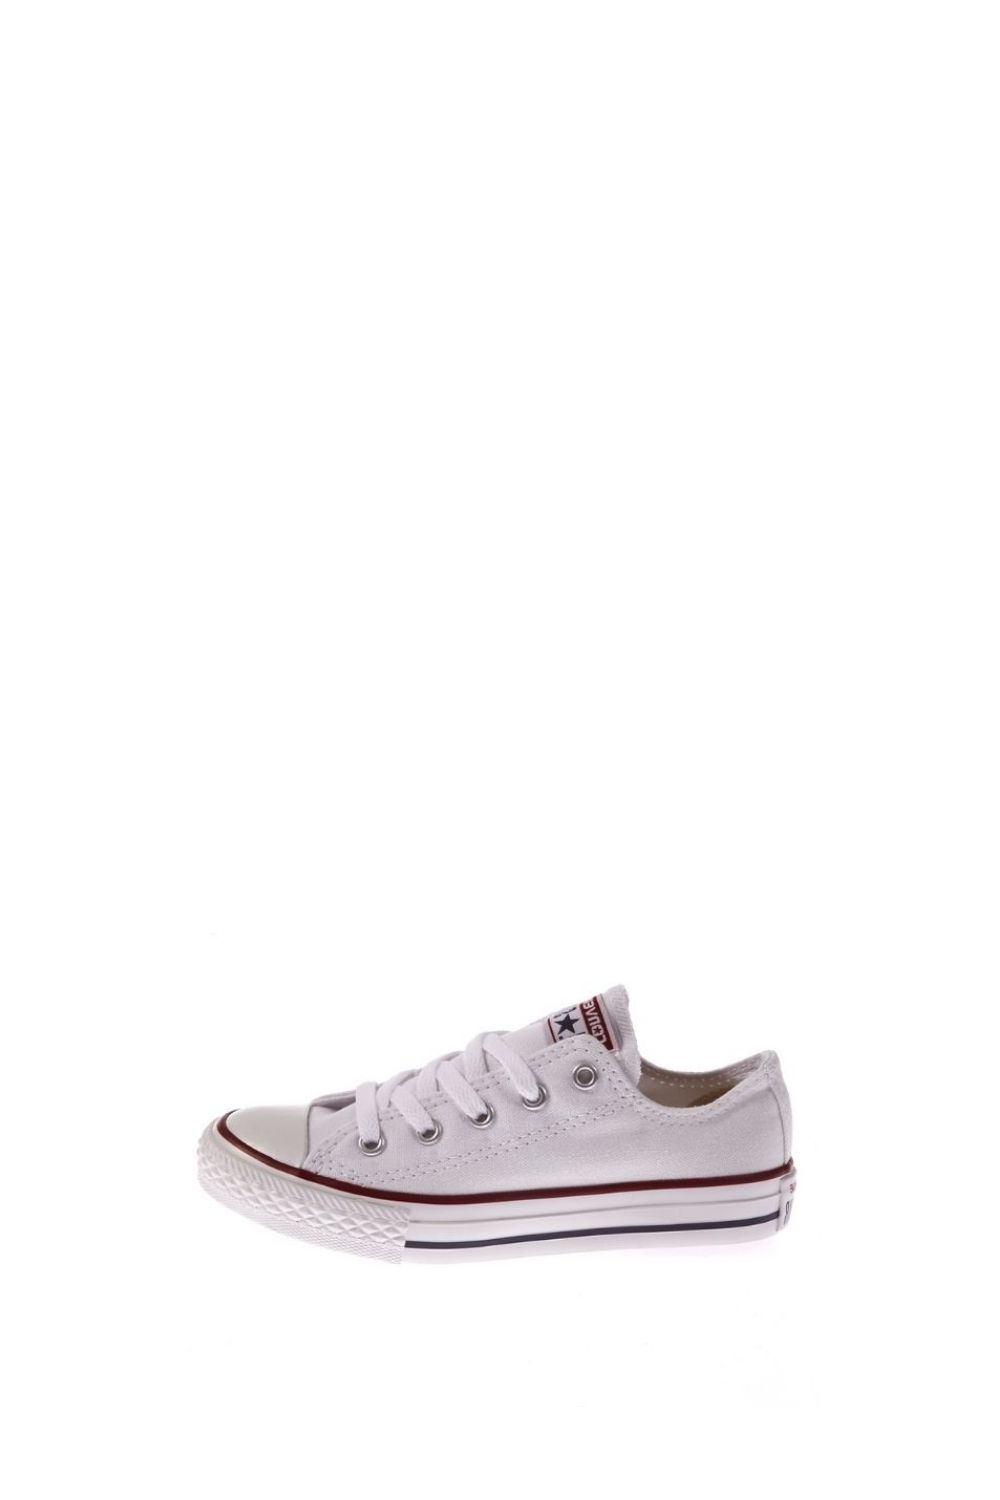 CONVERSE – Παιδικά παπούτσια Chuck Taylor λευκά 1191474.0-0091